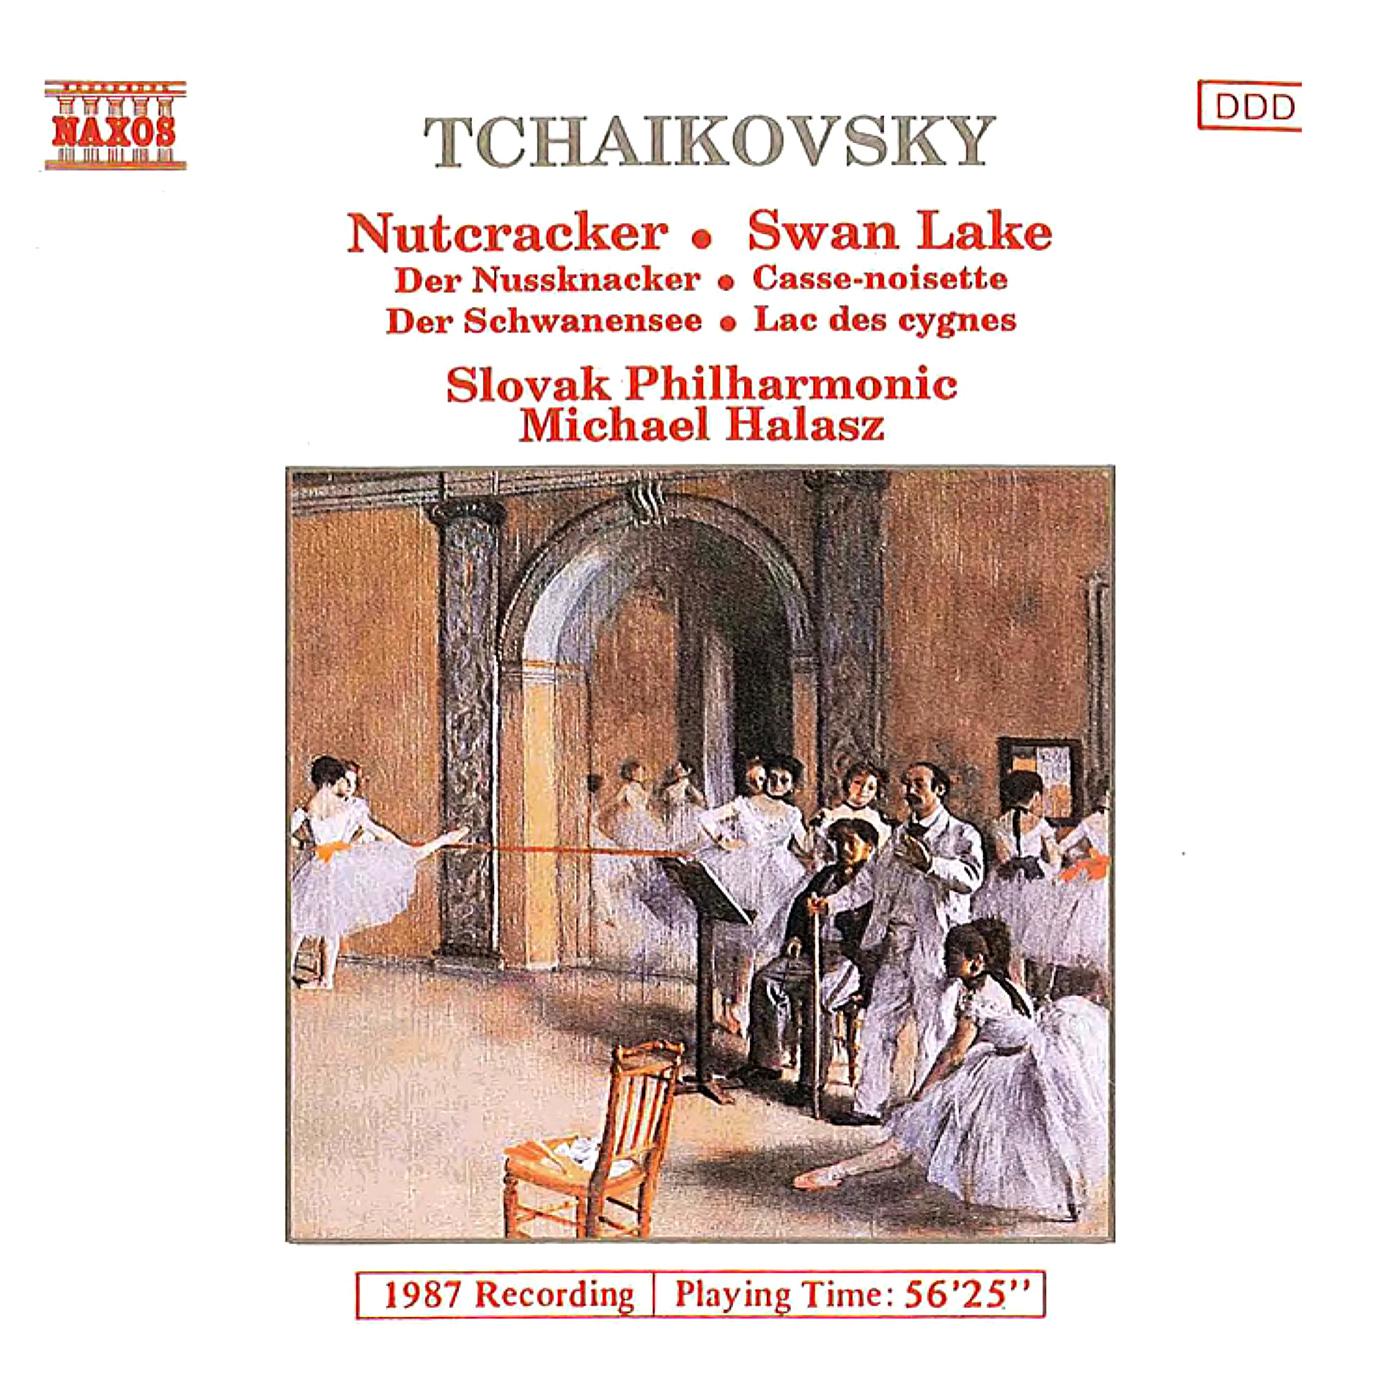 The Nutcracker Suite, Op. 71a: I. Miniature Overture